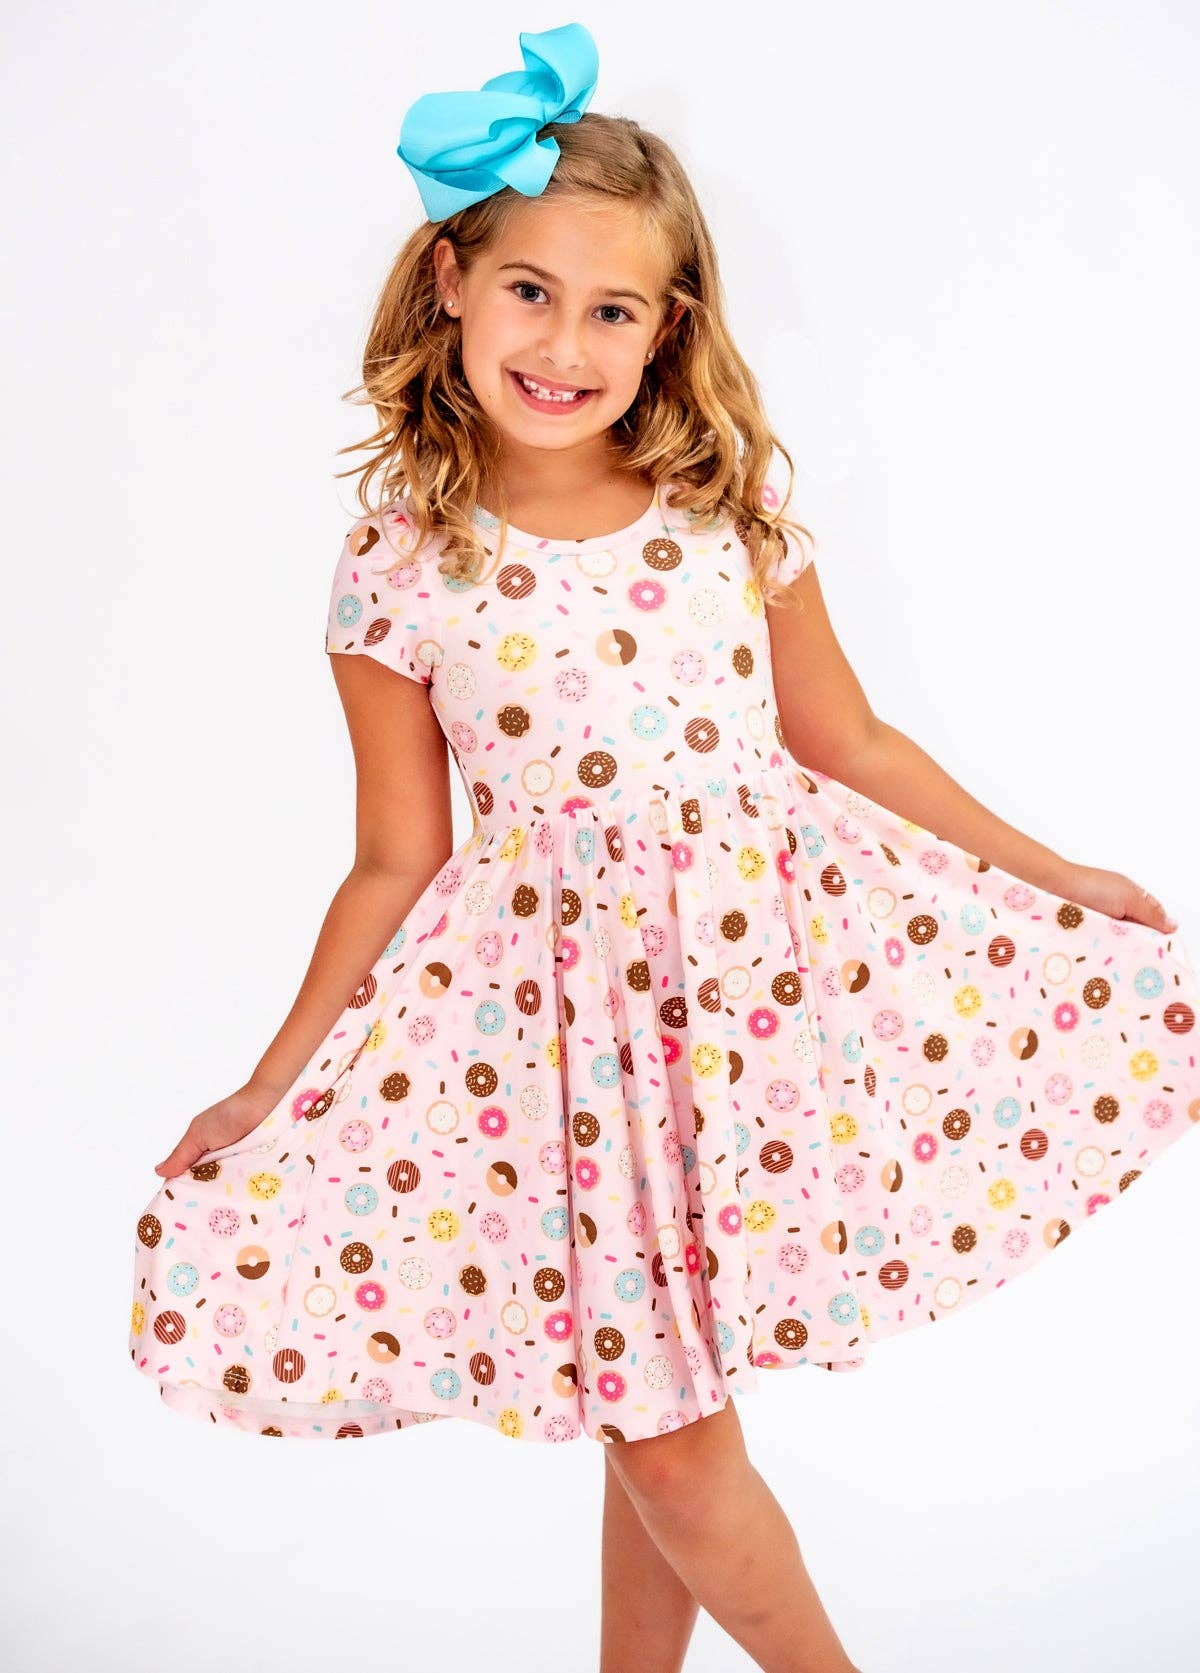 Charlie's Project Kids - Donut Sprinkles Girls Short Sleeve Hugs Twirl Dress